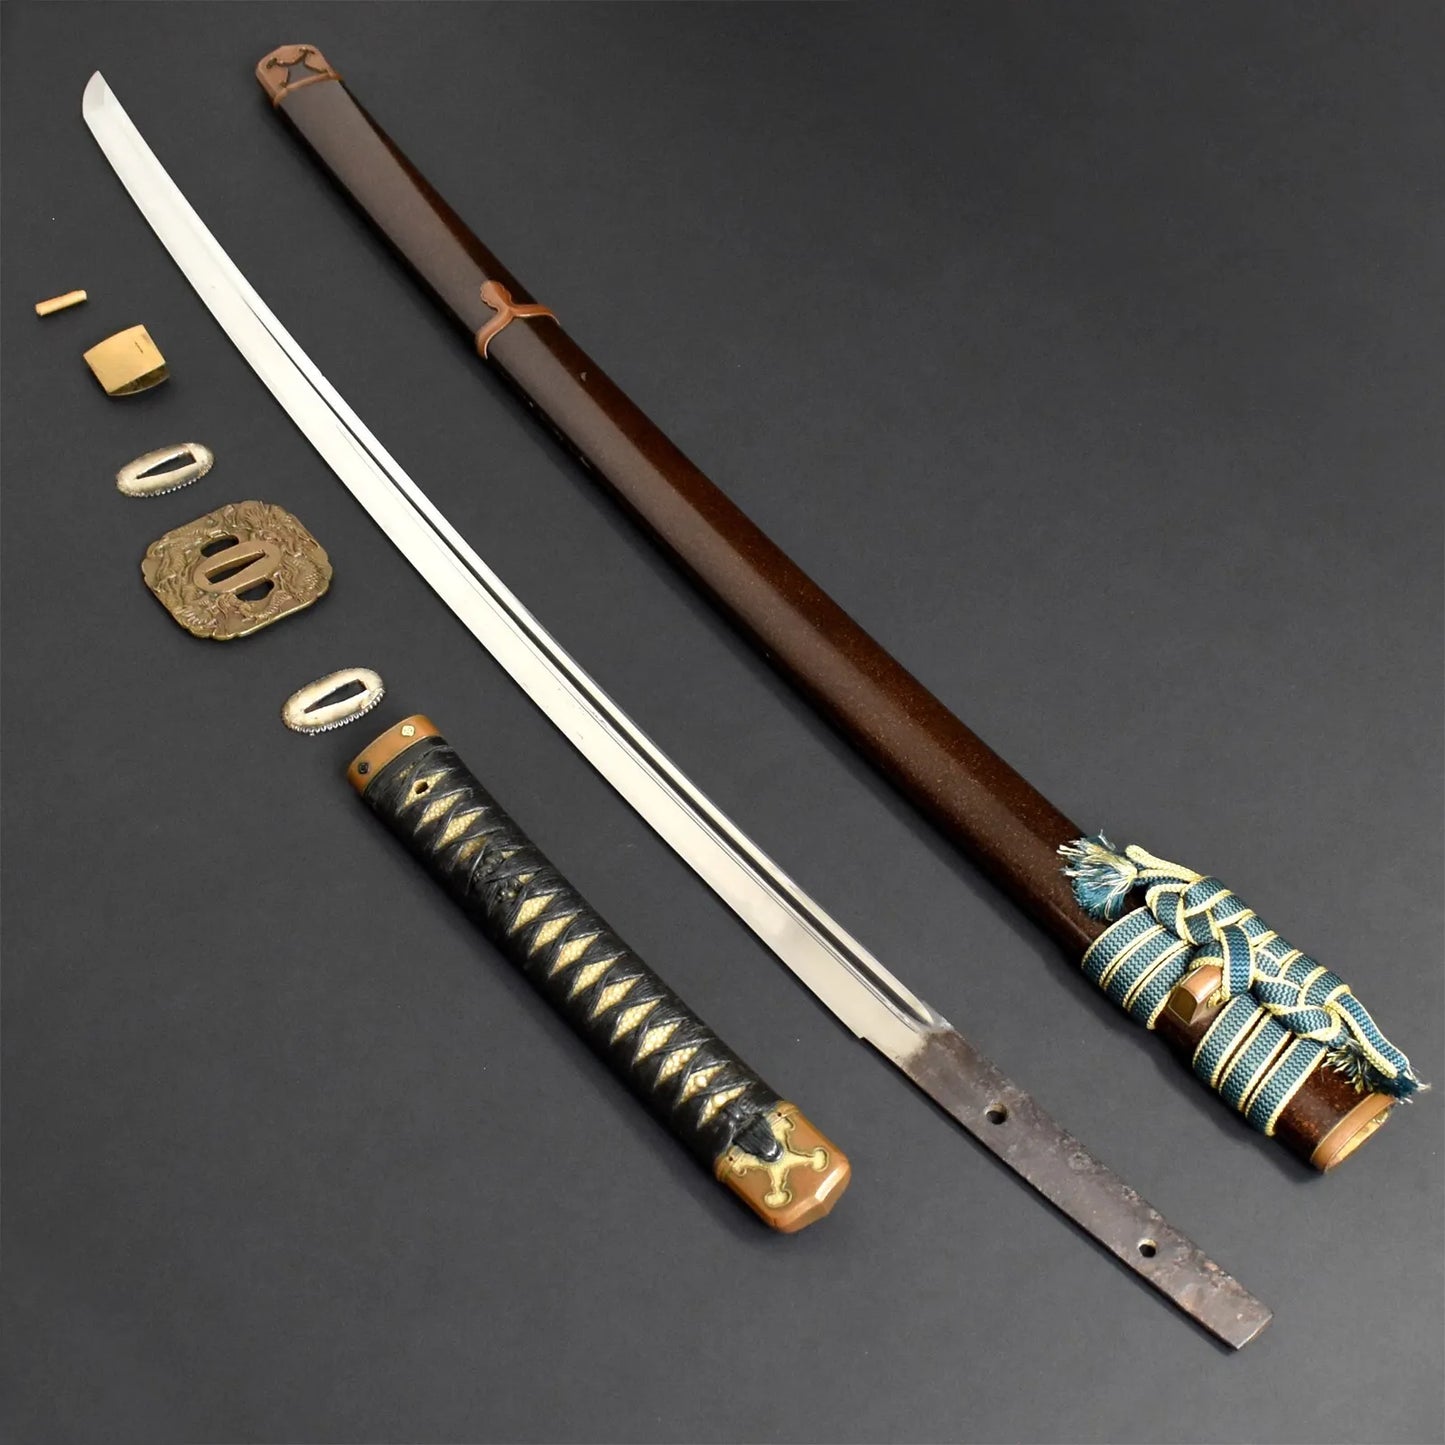 Exquisite Antique Japanese Long Sword Katana Nihonto Blade Collectible Samurai Weapon Unique.